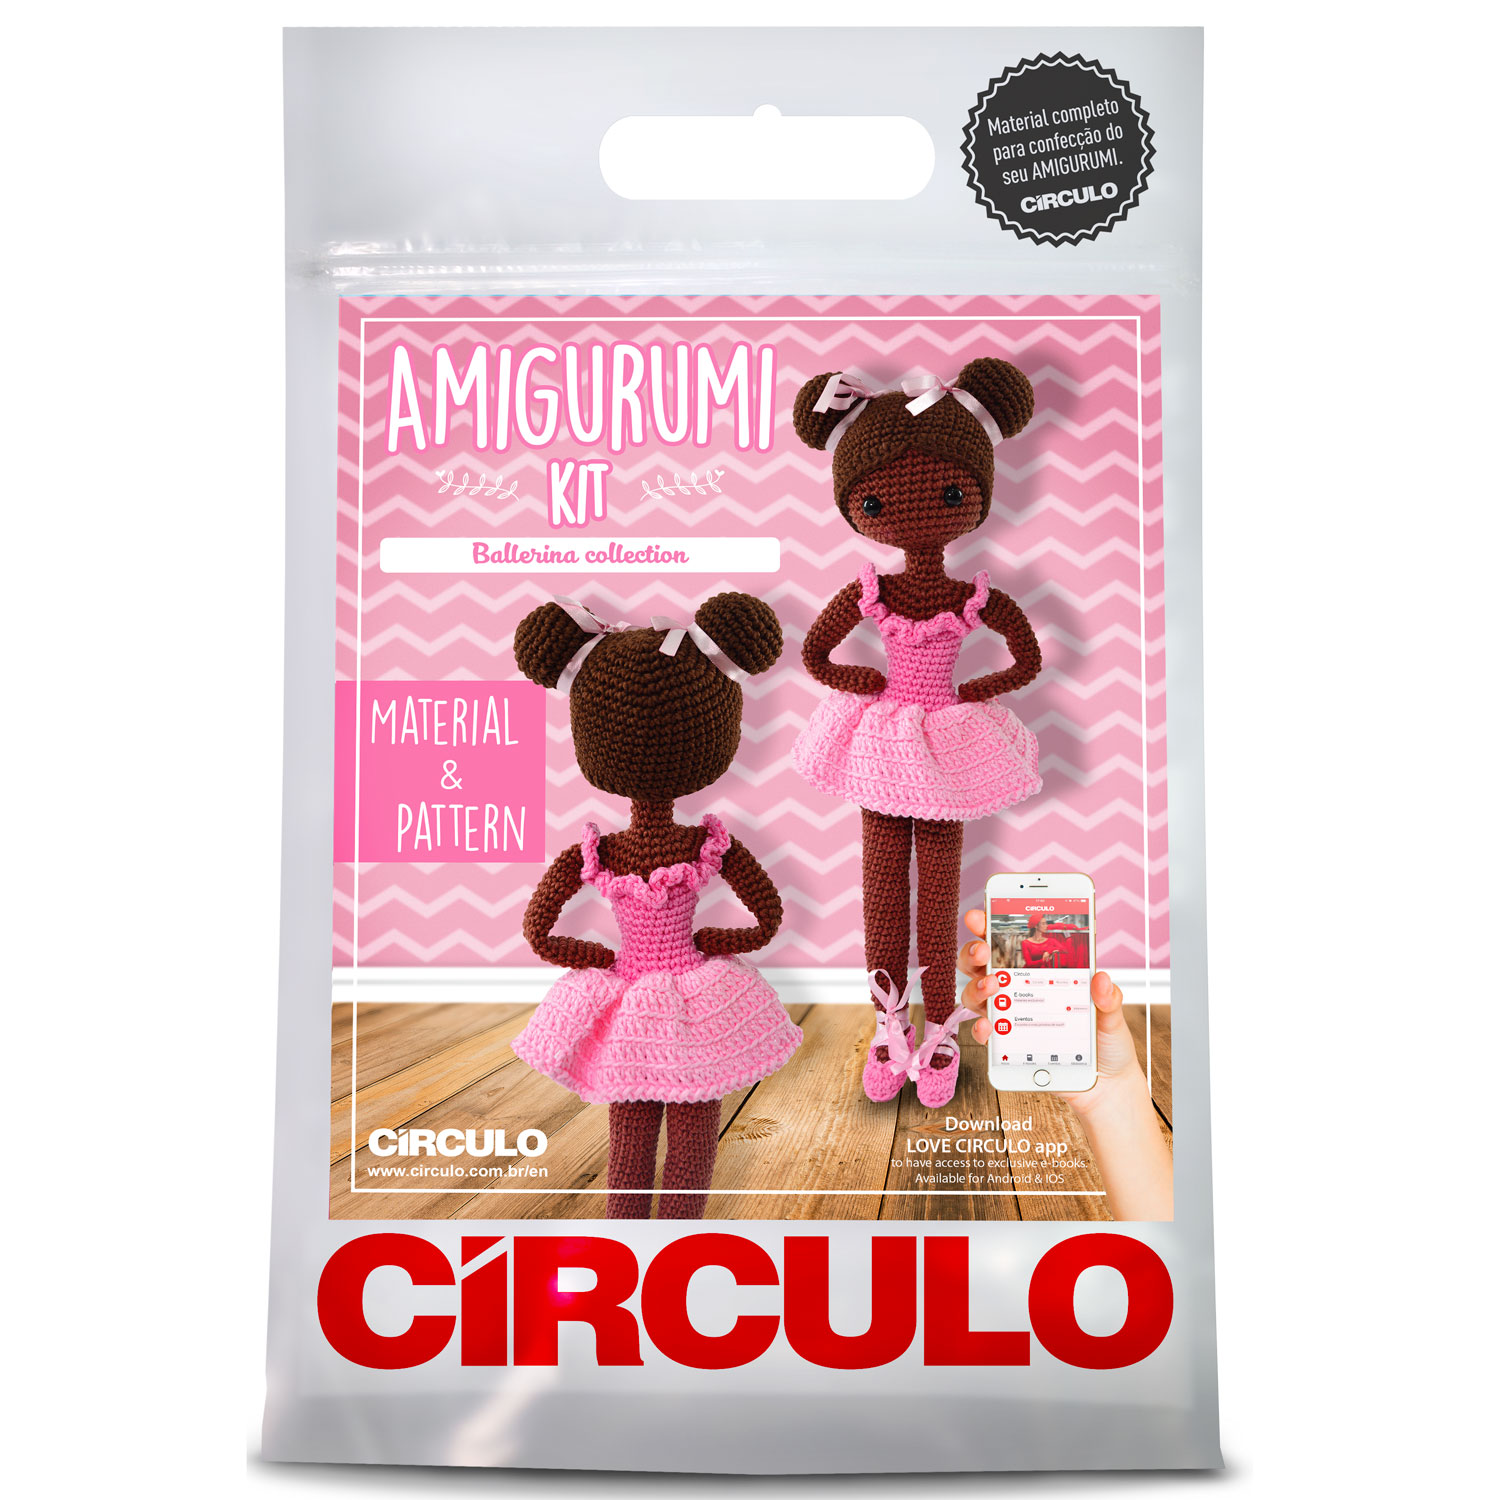 Amigurumi Kit - Circulo